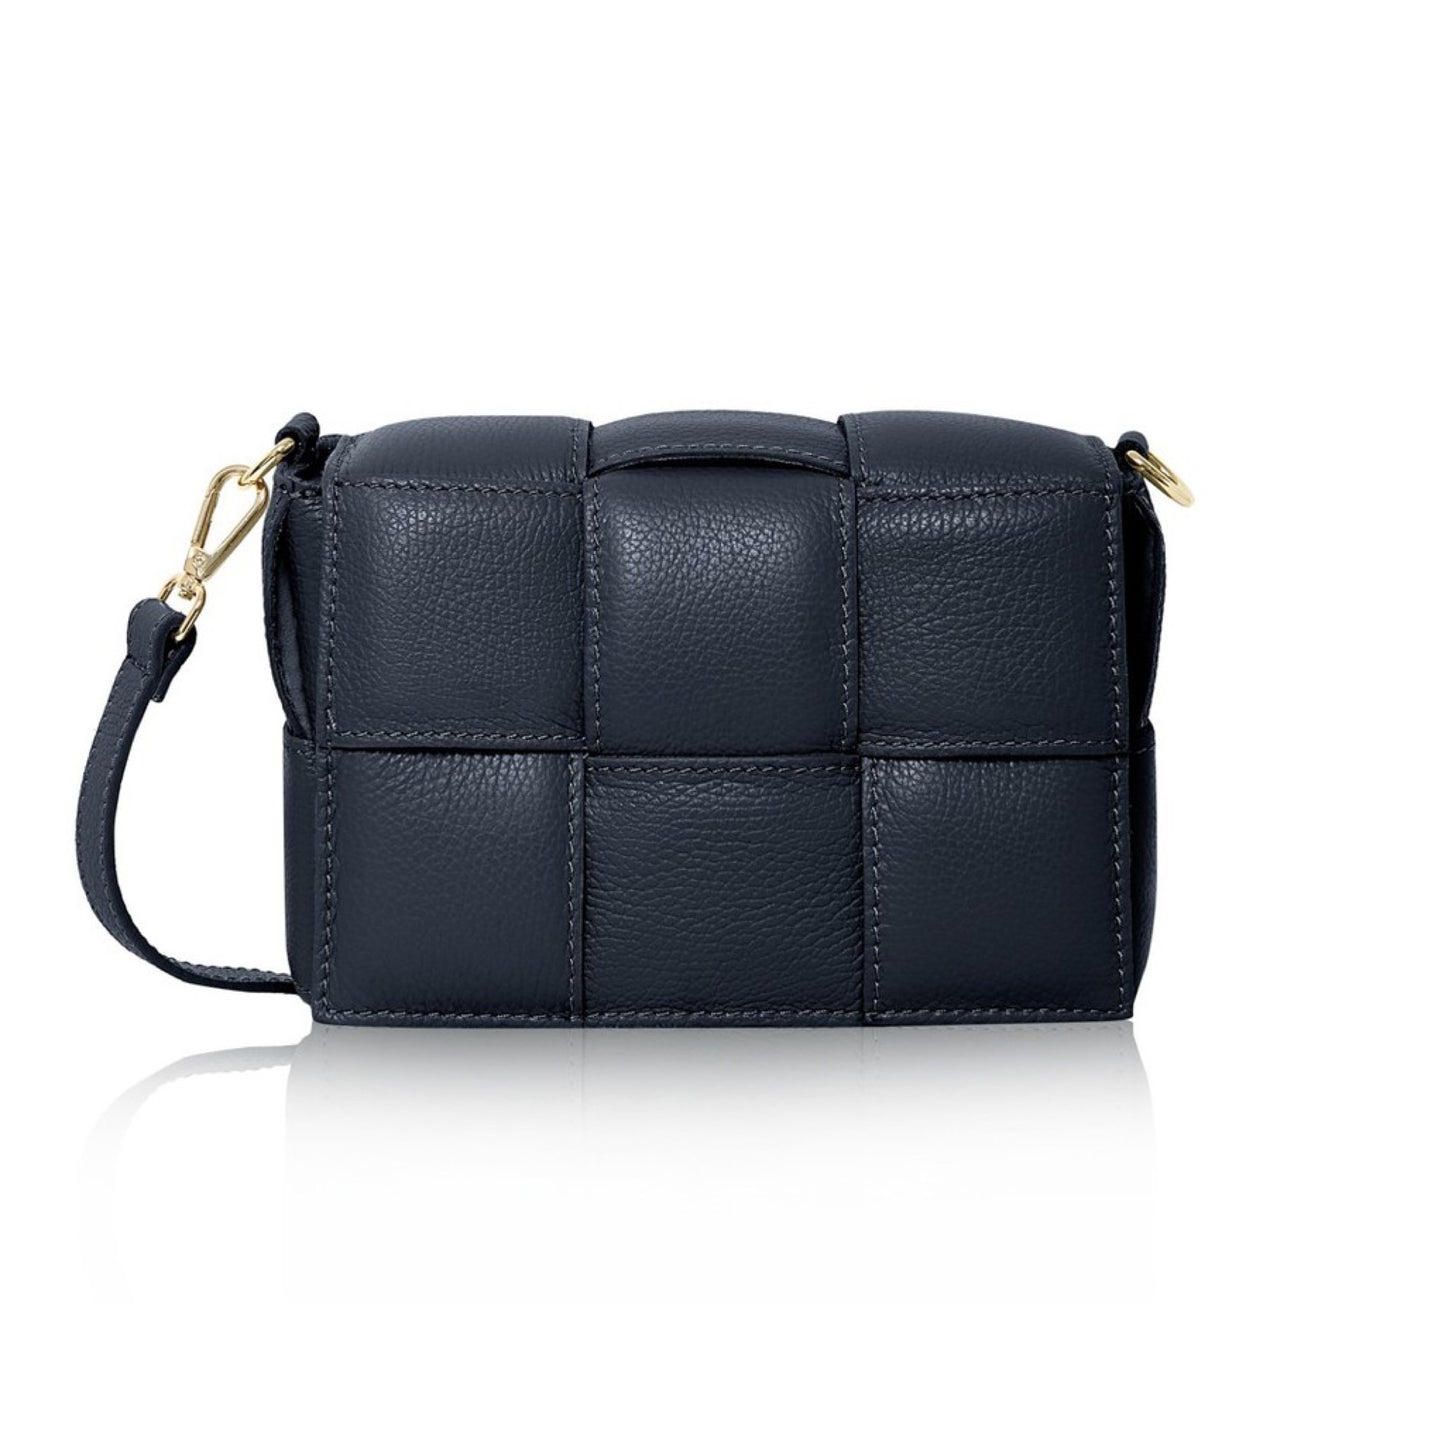 Anna - Woven leather box bag